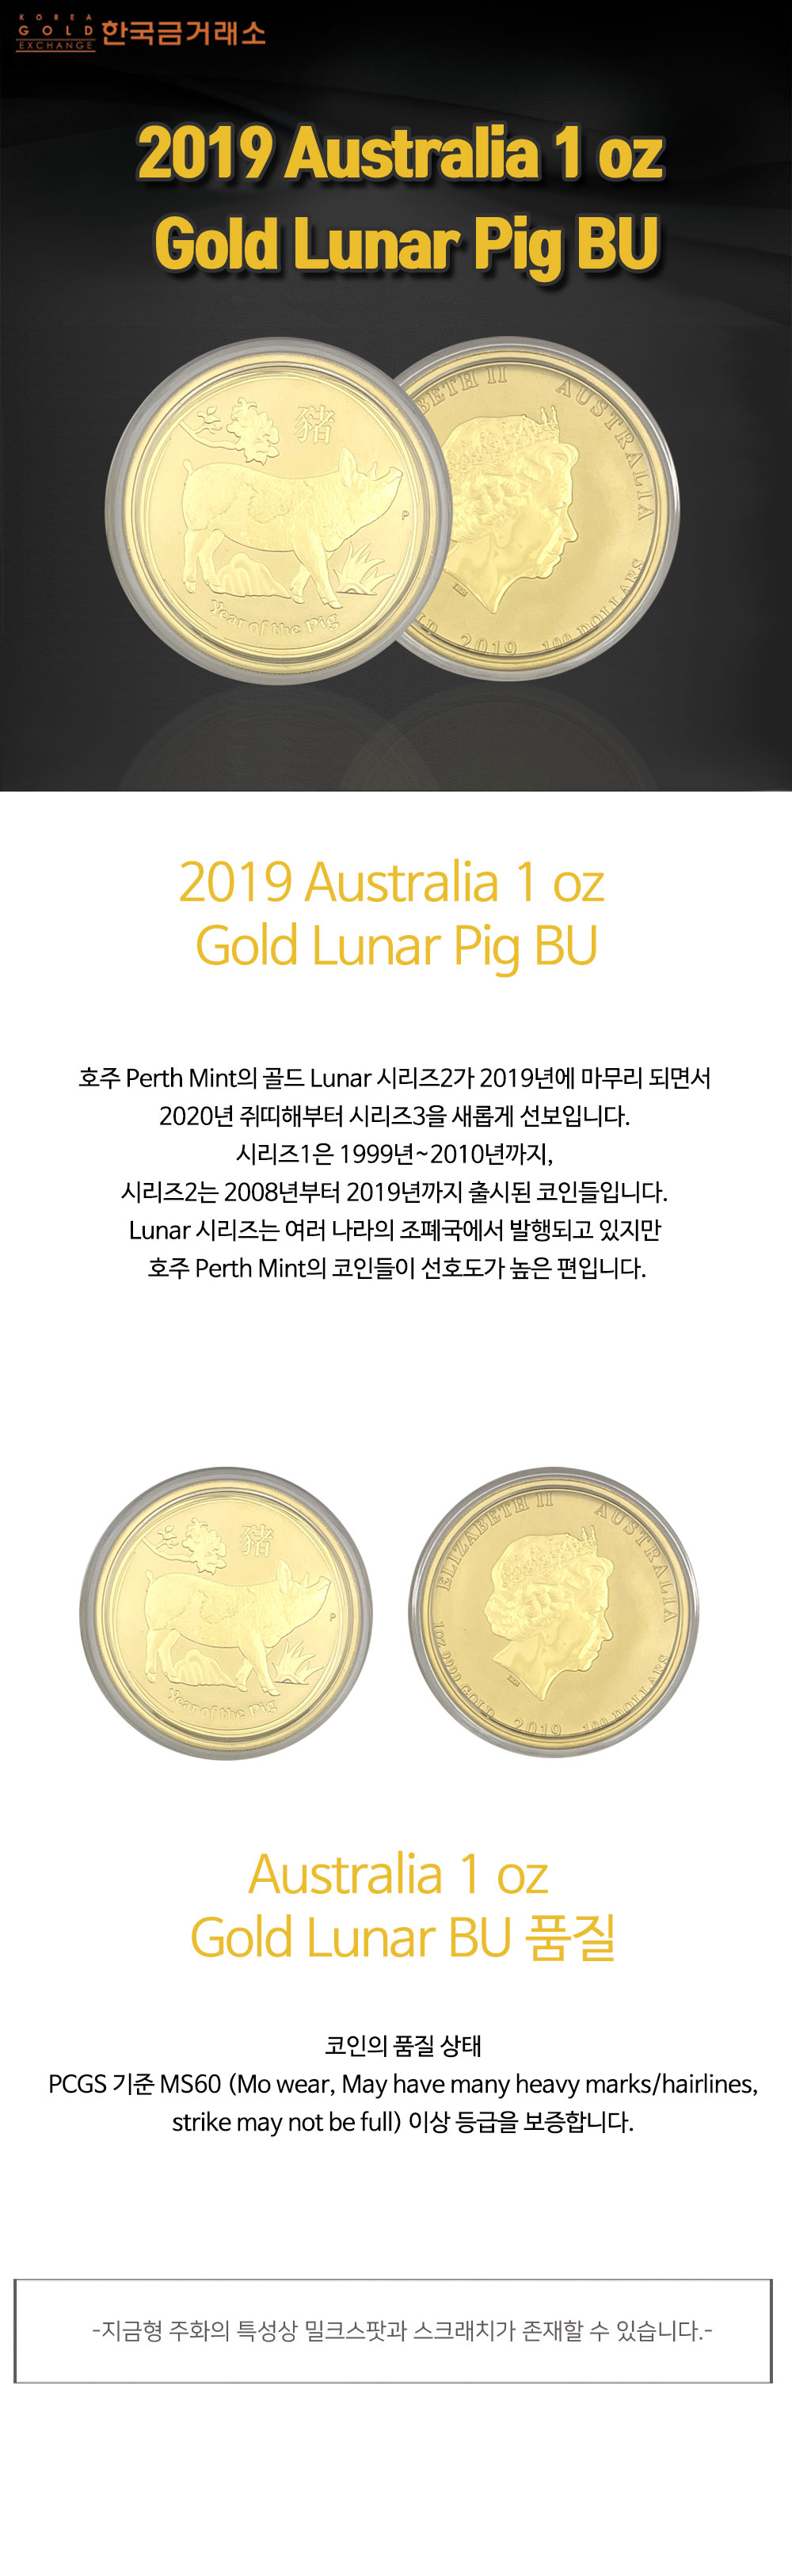 2019 Australia 1 Oz Gold Lunar Pig Bu : 좋은 금, 은 싸게 사고 비싸게 팔기 (위탁매매)